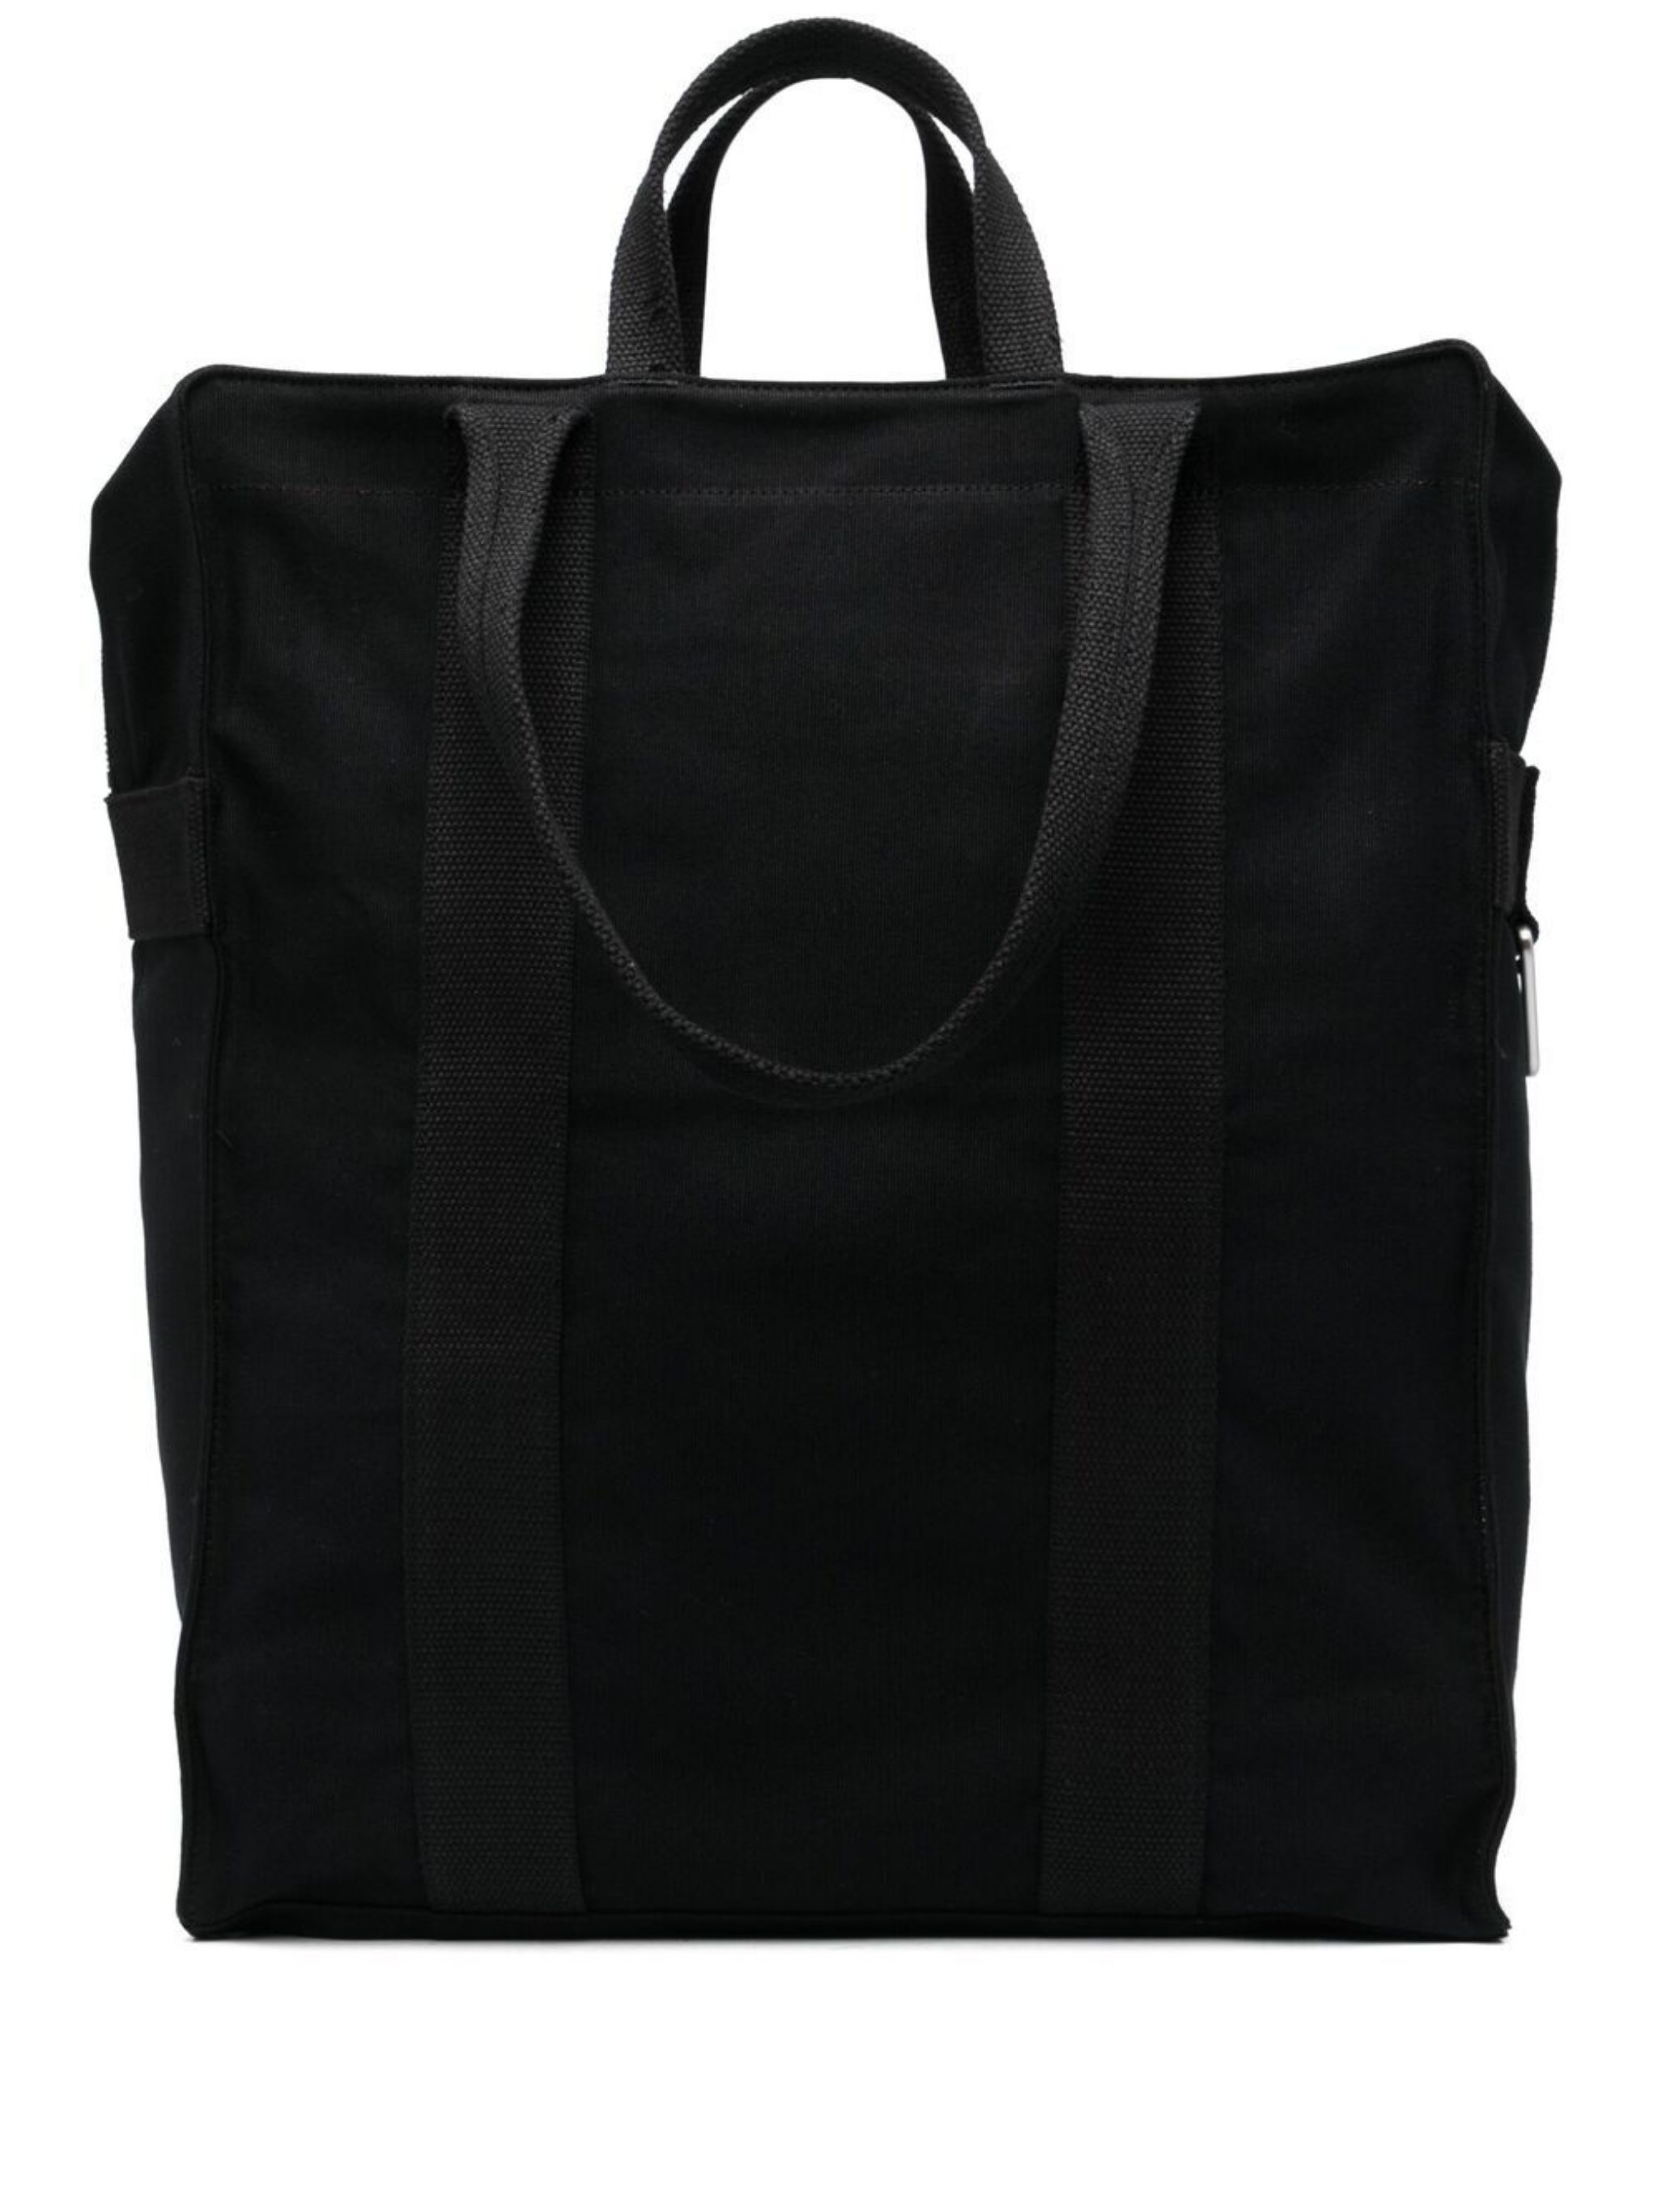 Heron Preston x Calvin Klein Large Tote Bag